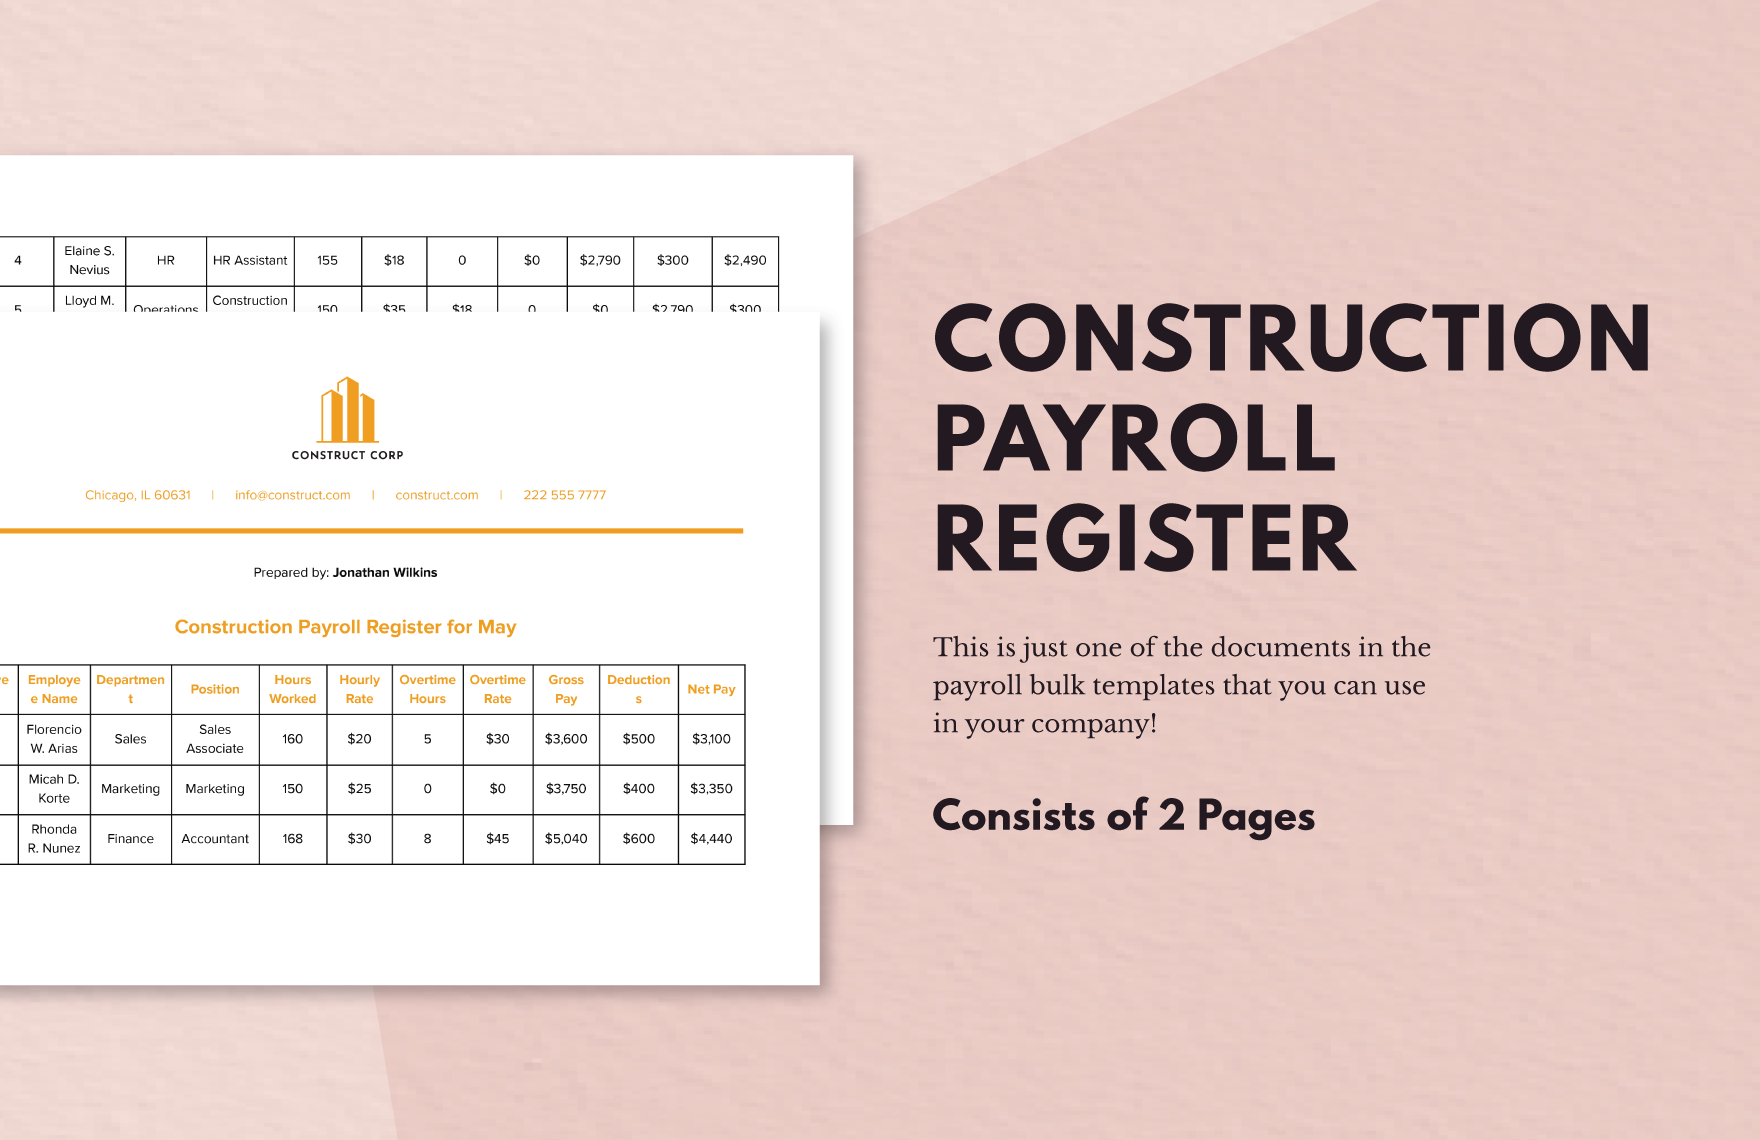 Construction Payroll Register in Word, Google Docs